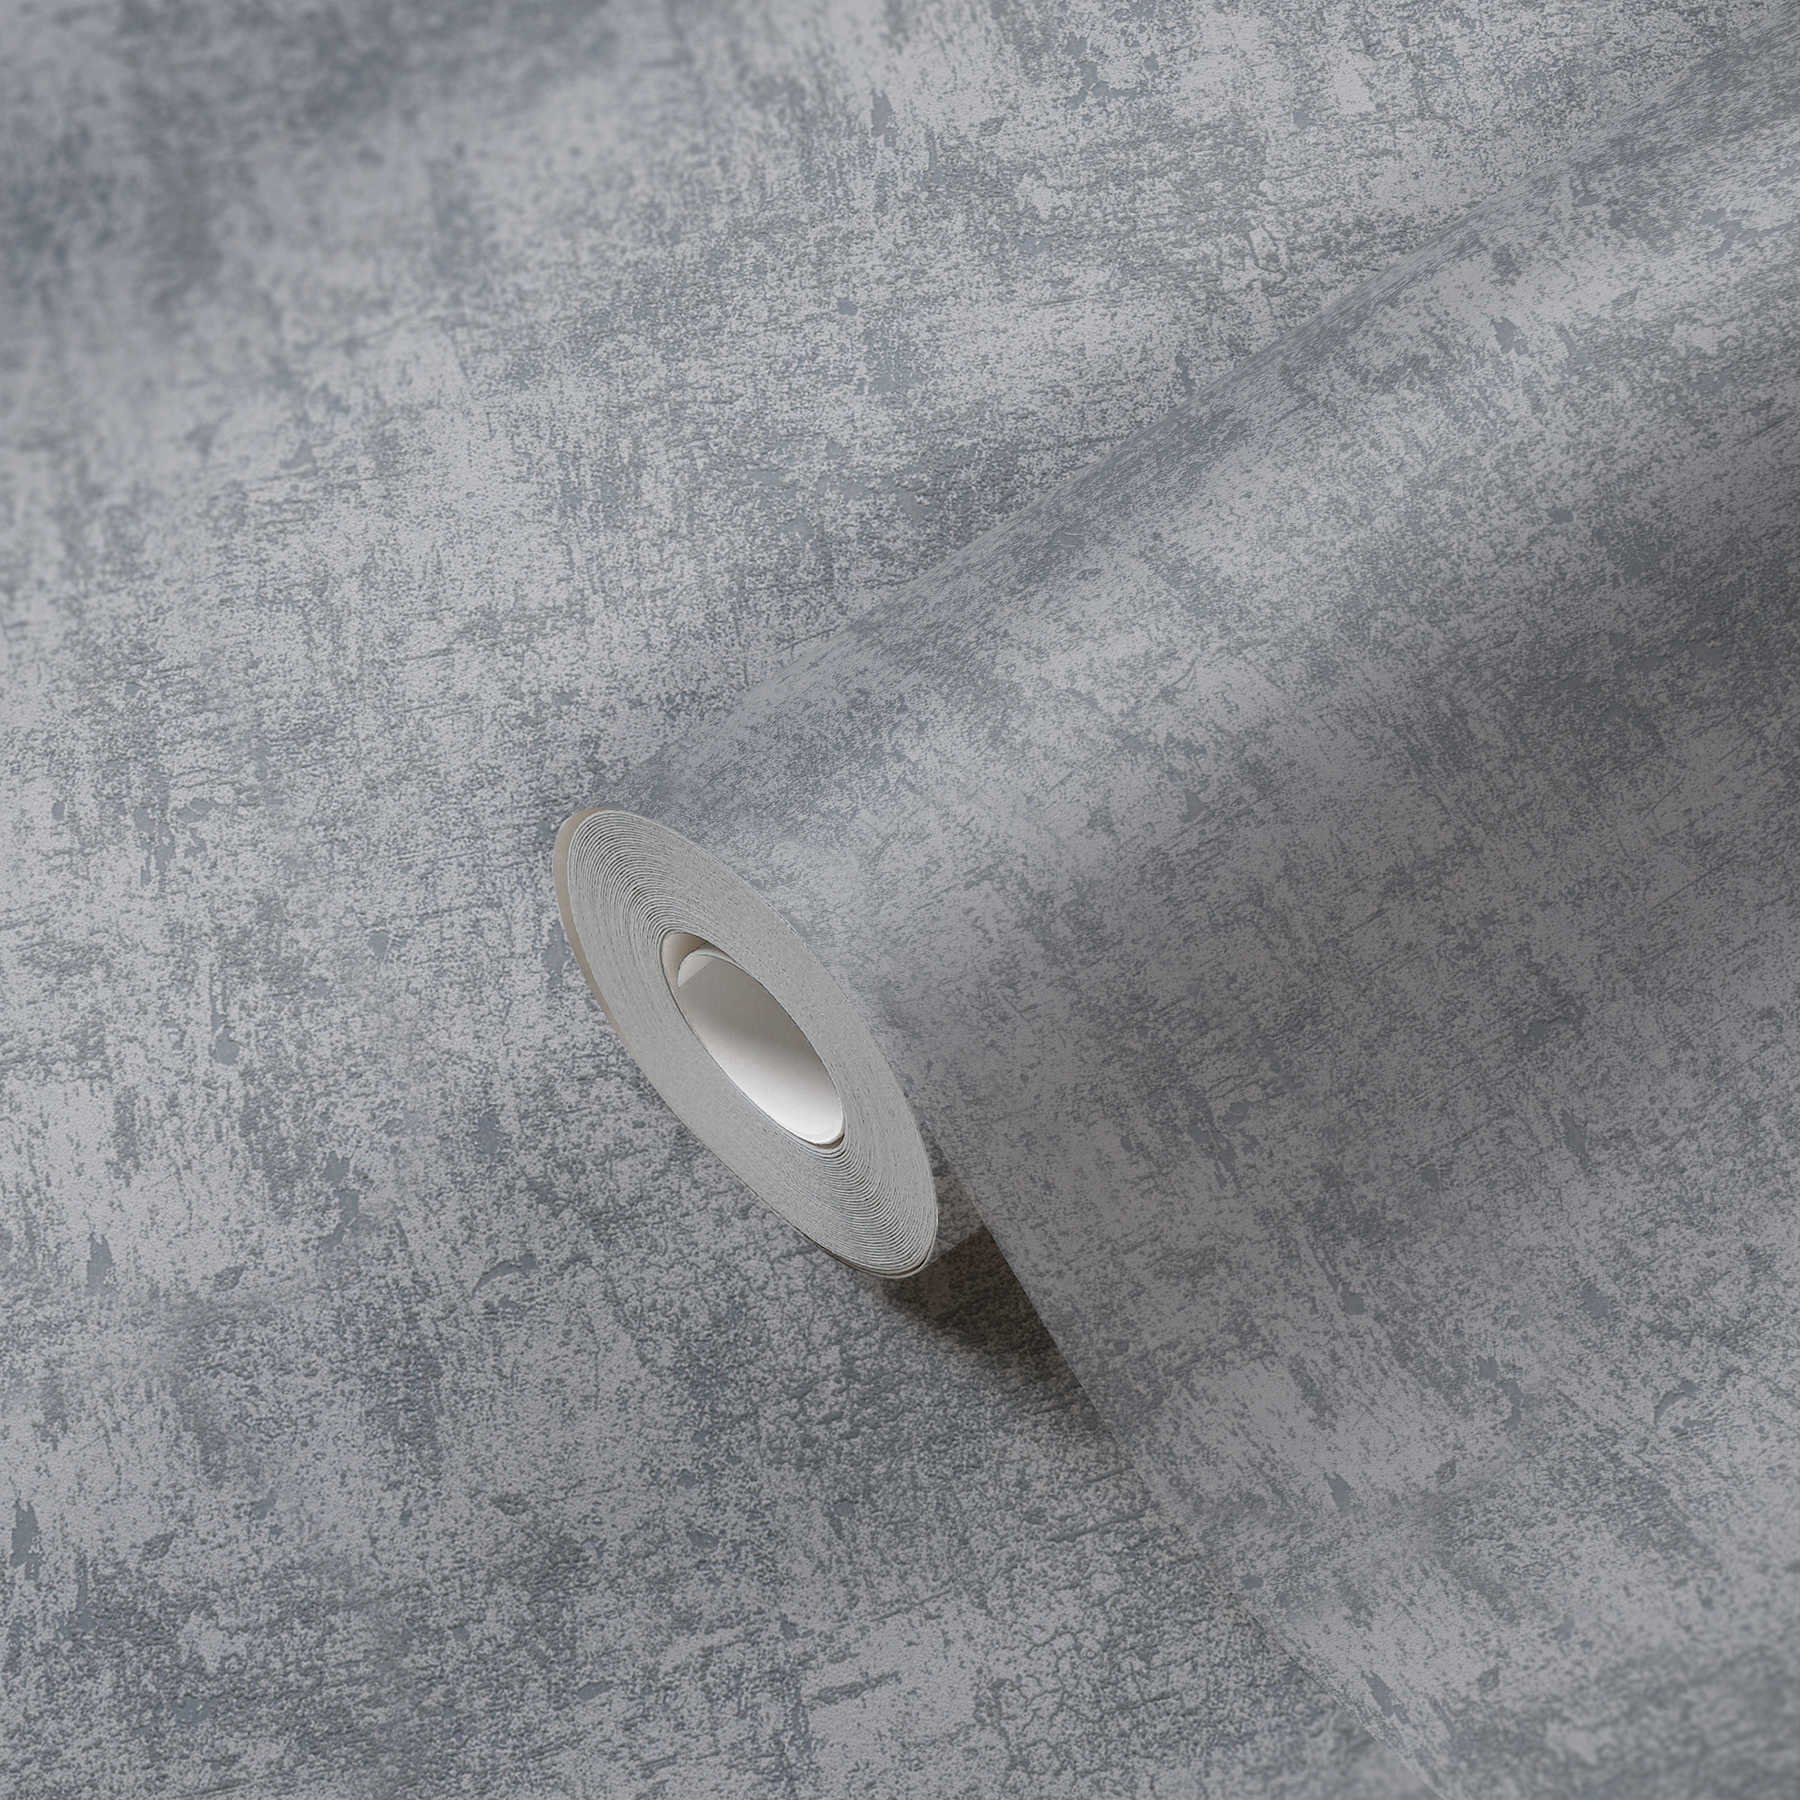             Papel pintado no tejido oscuro con aspecto de hormigón - gris
        